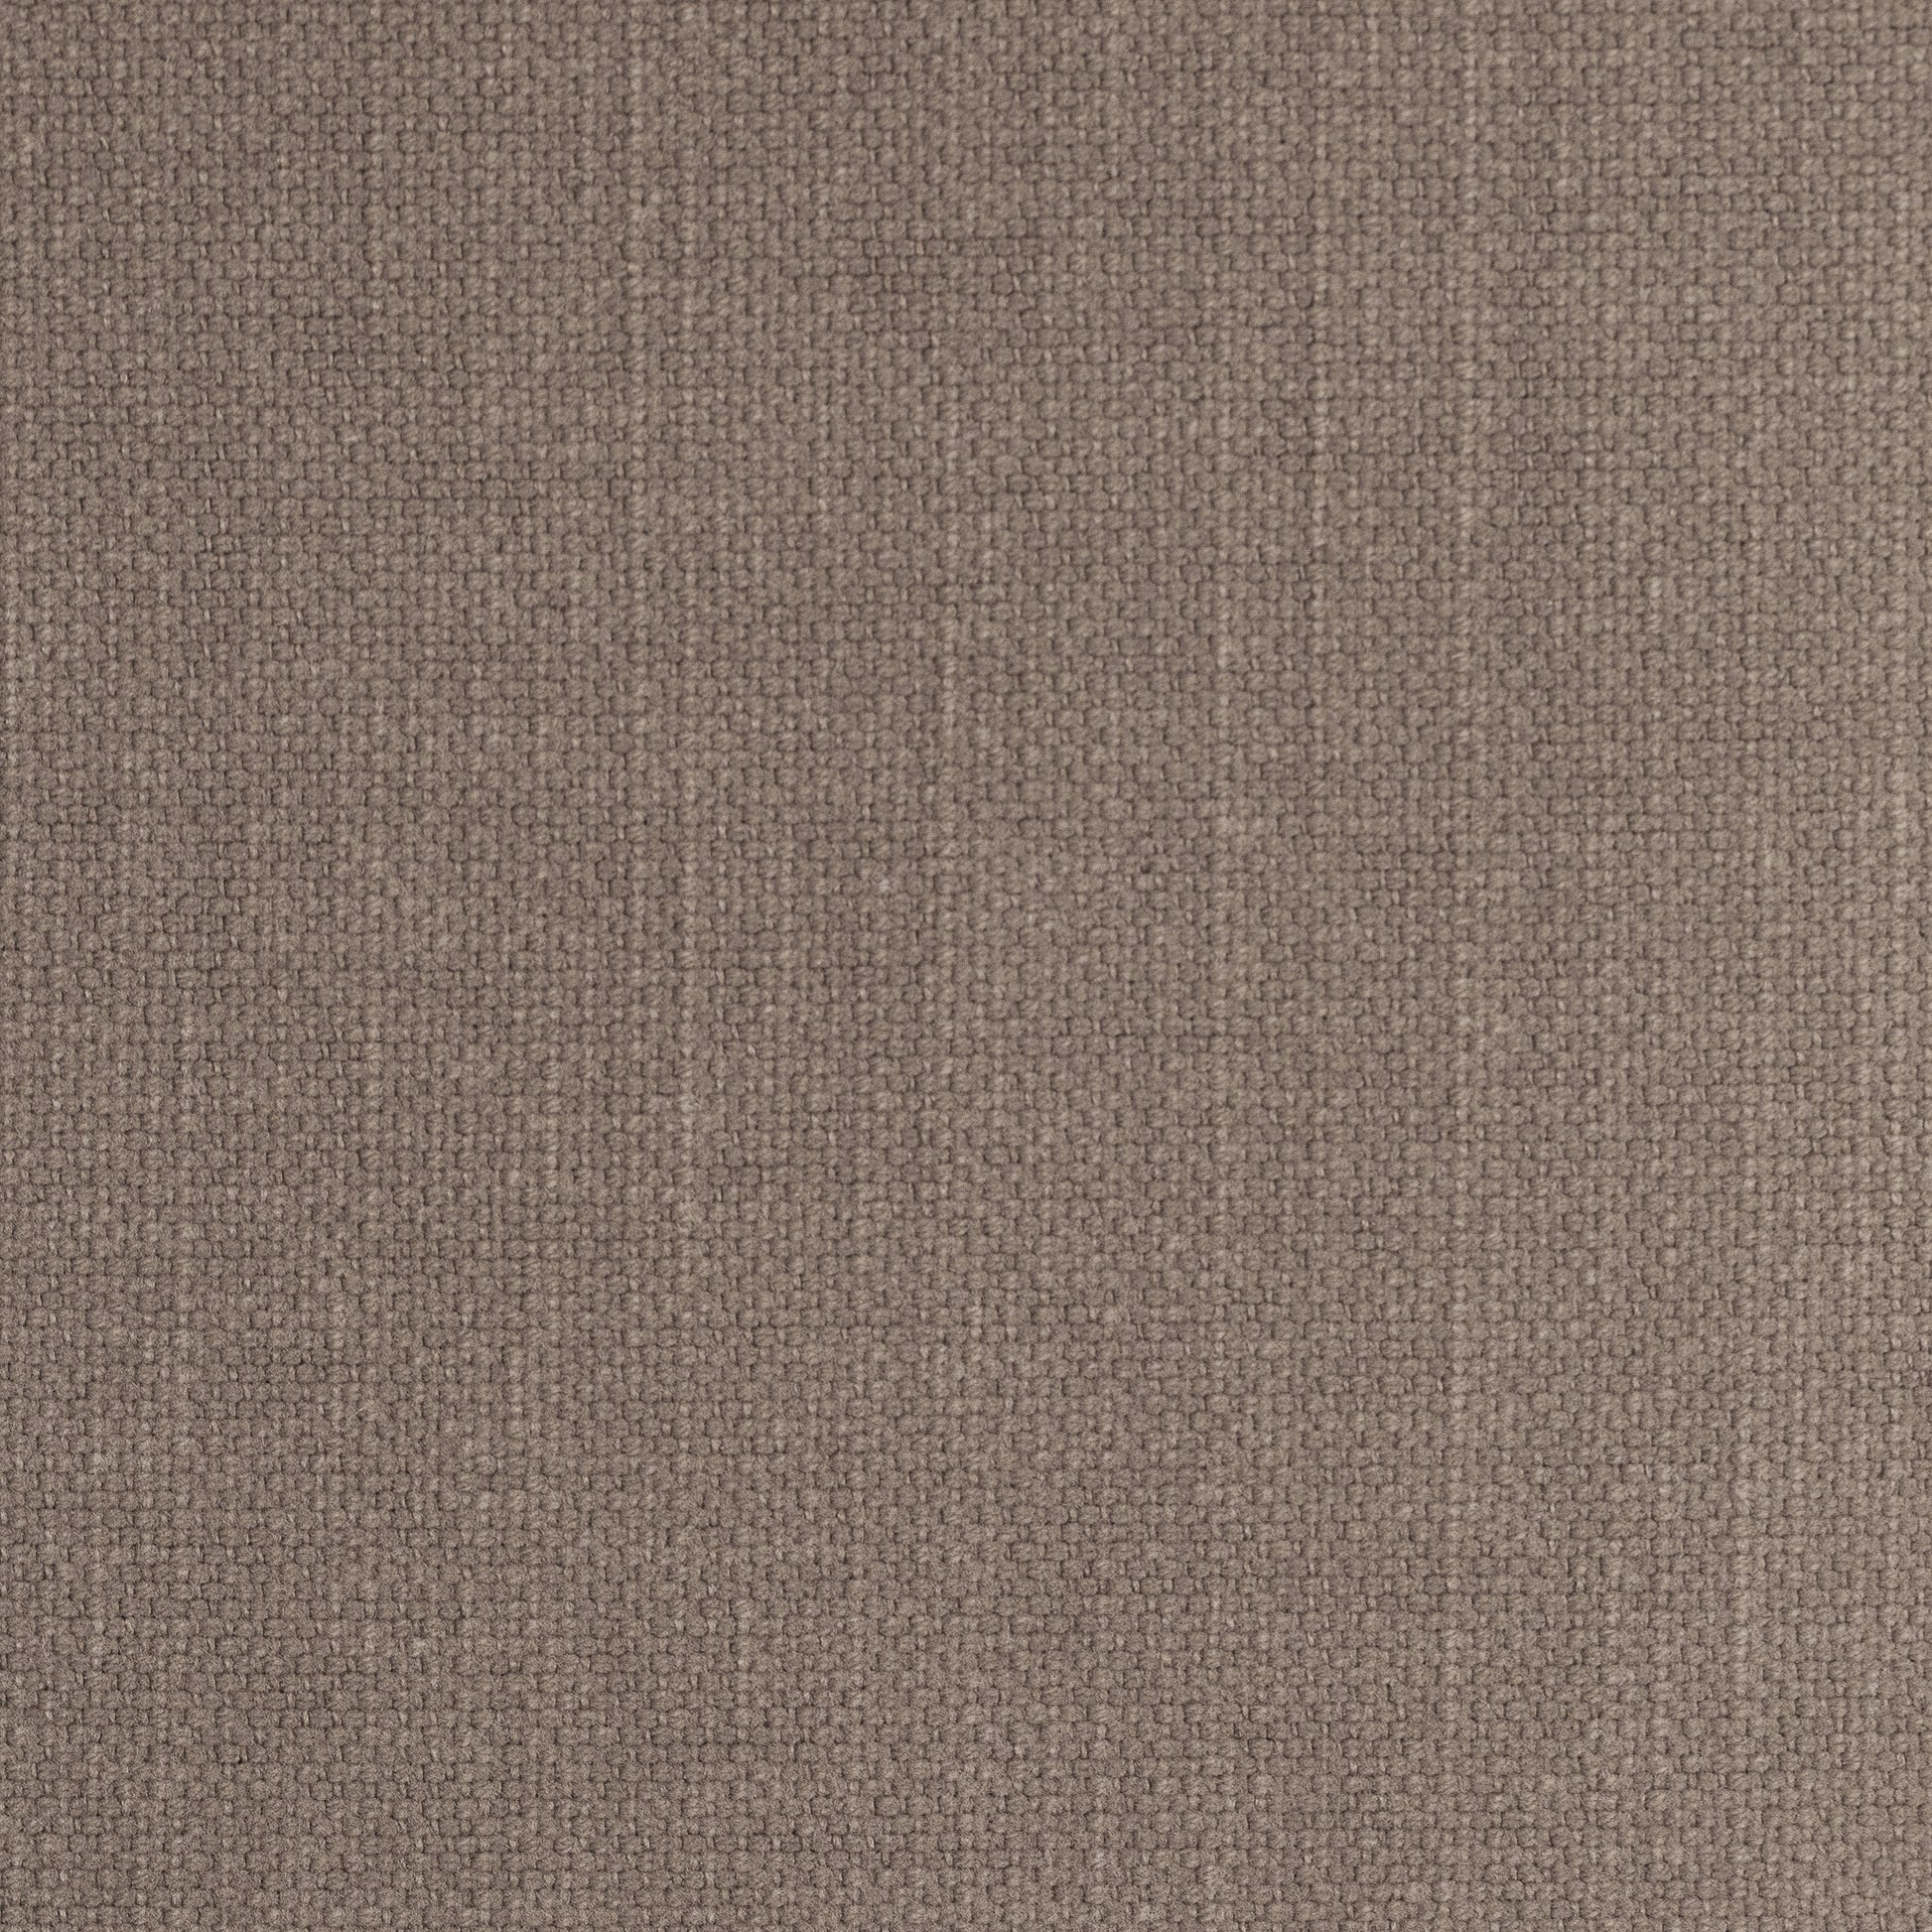 Textile sample linara 153 light brown 